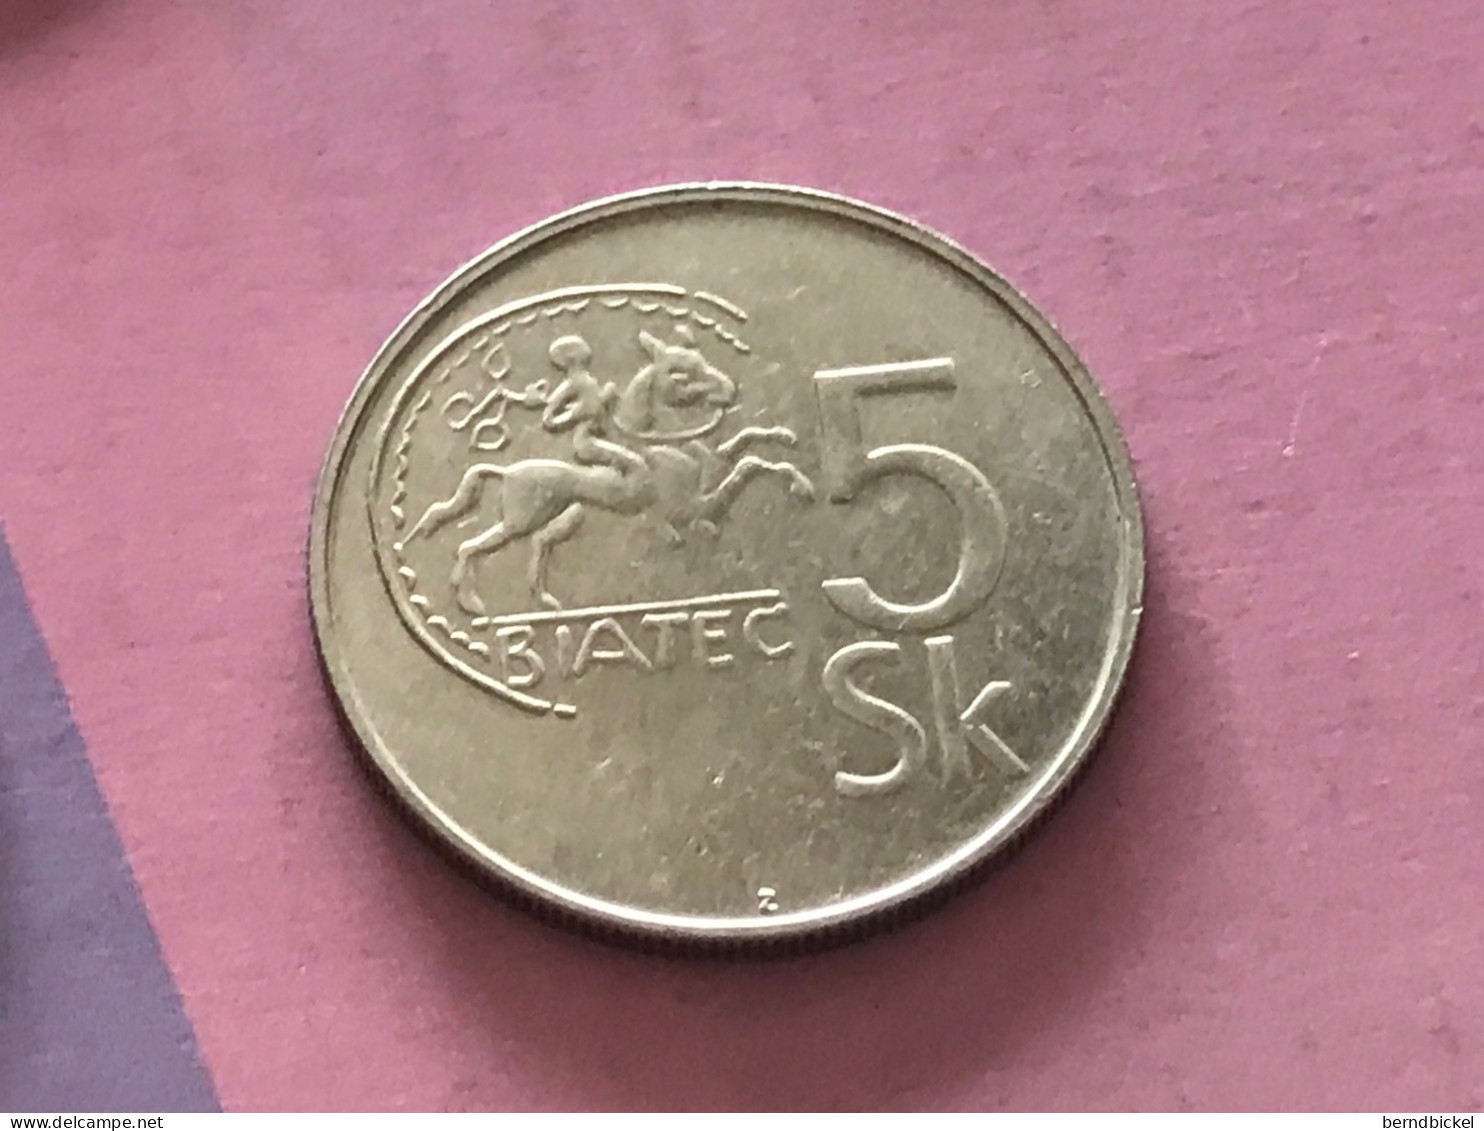 Münze Münzen Umlaufmünze Slowakei 5 Kronen 1994 - Slowakei